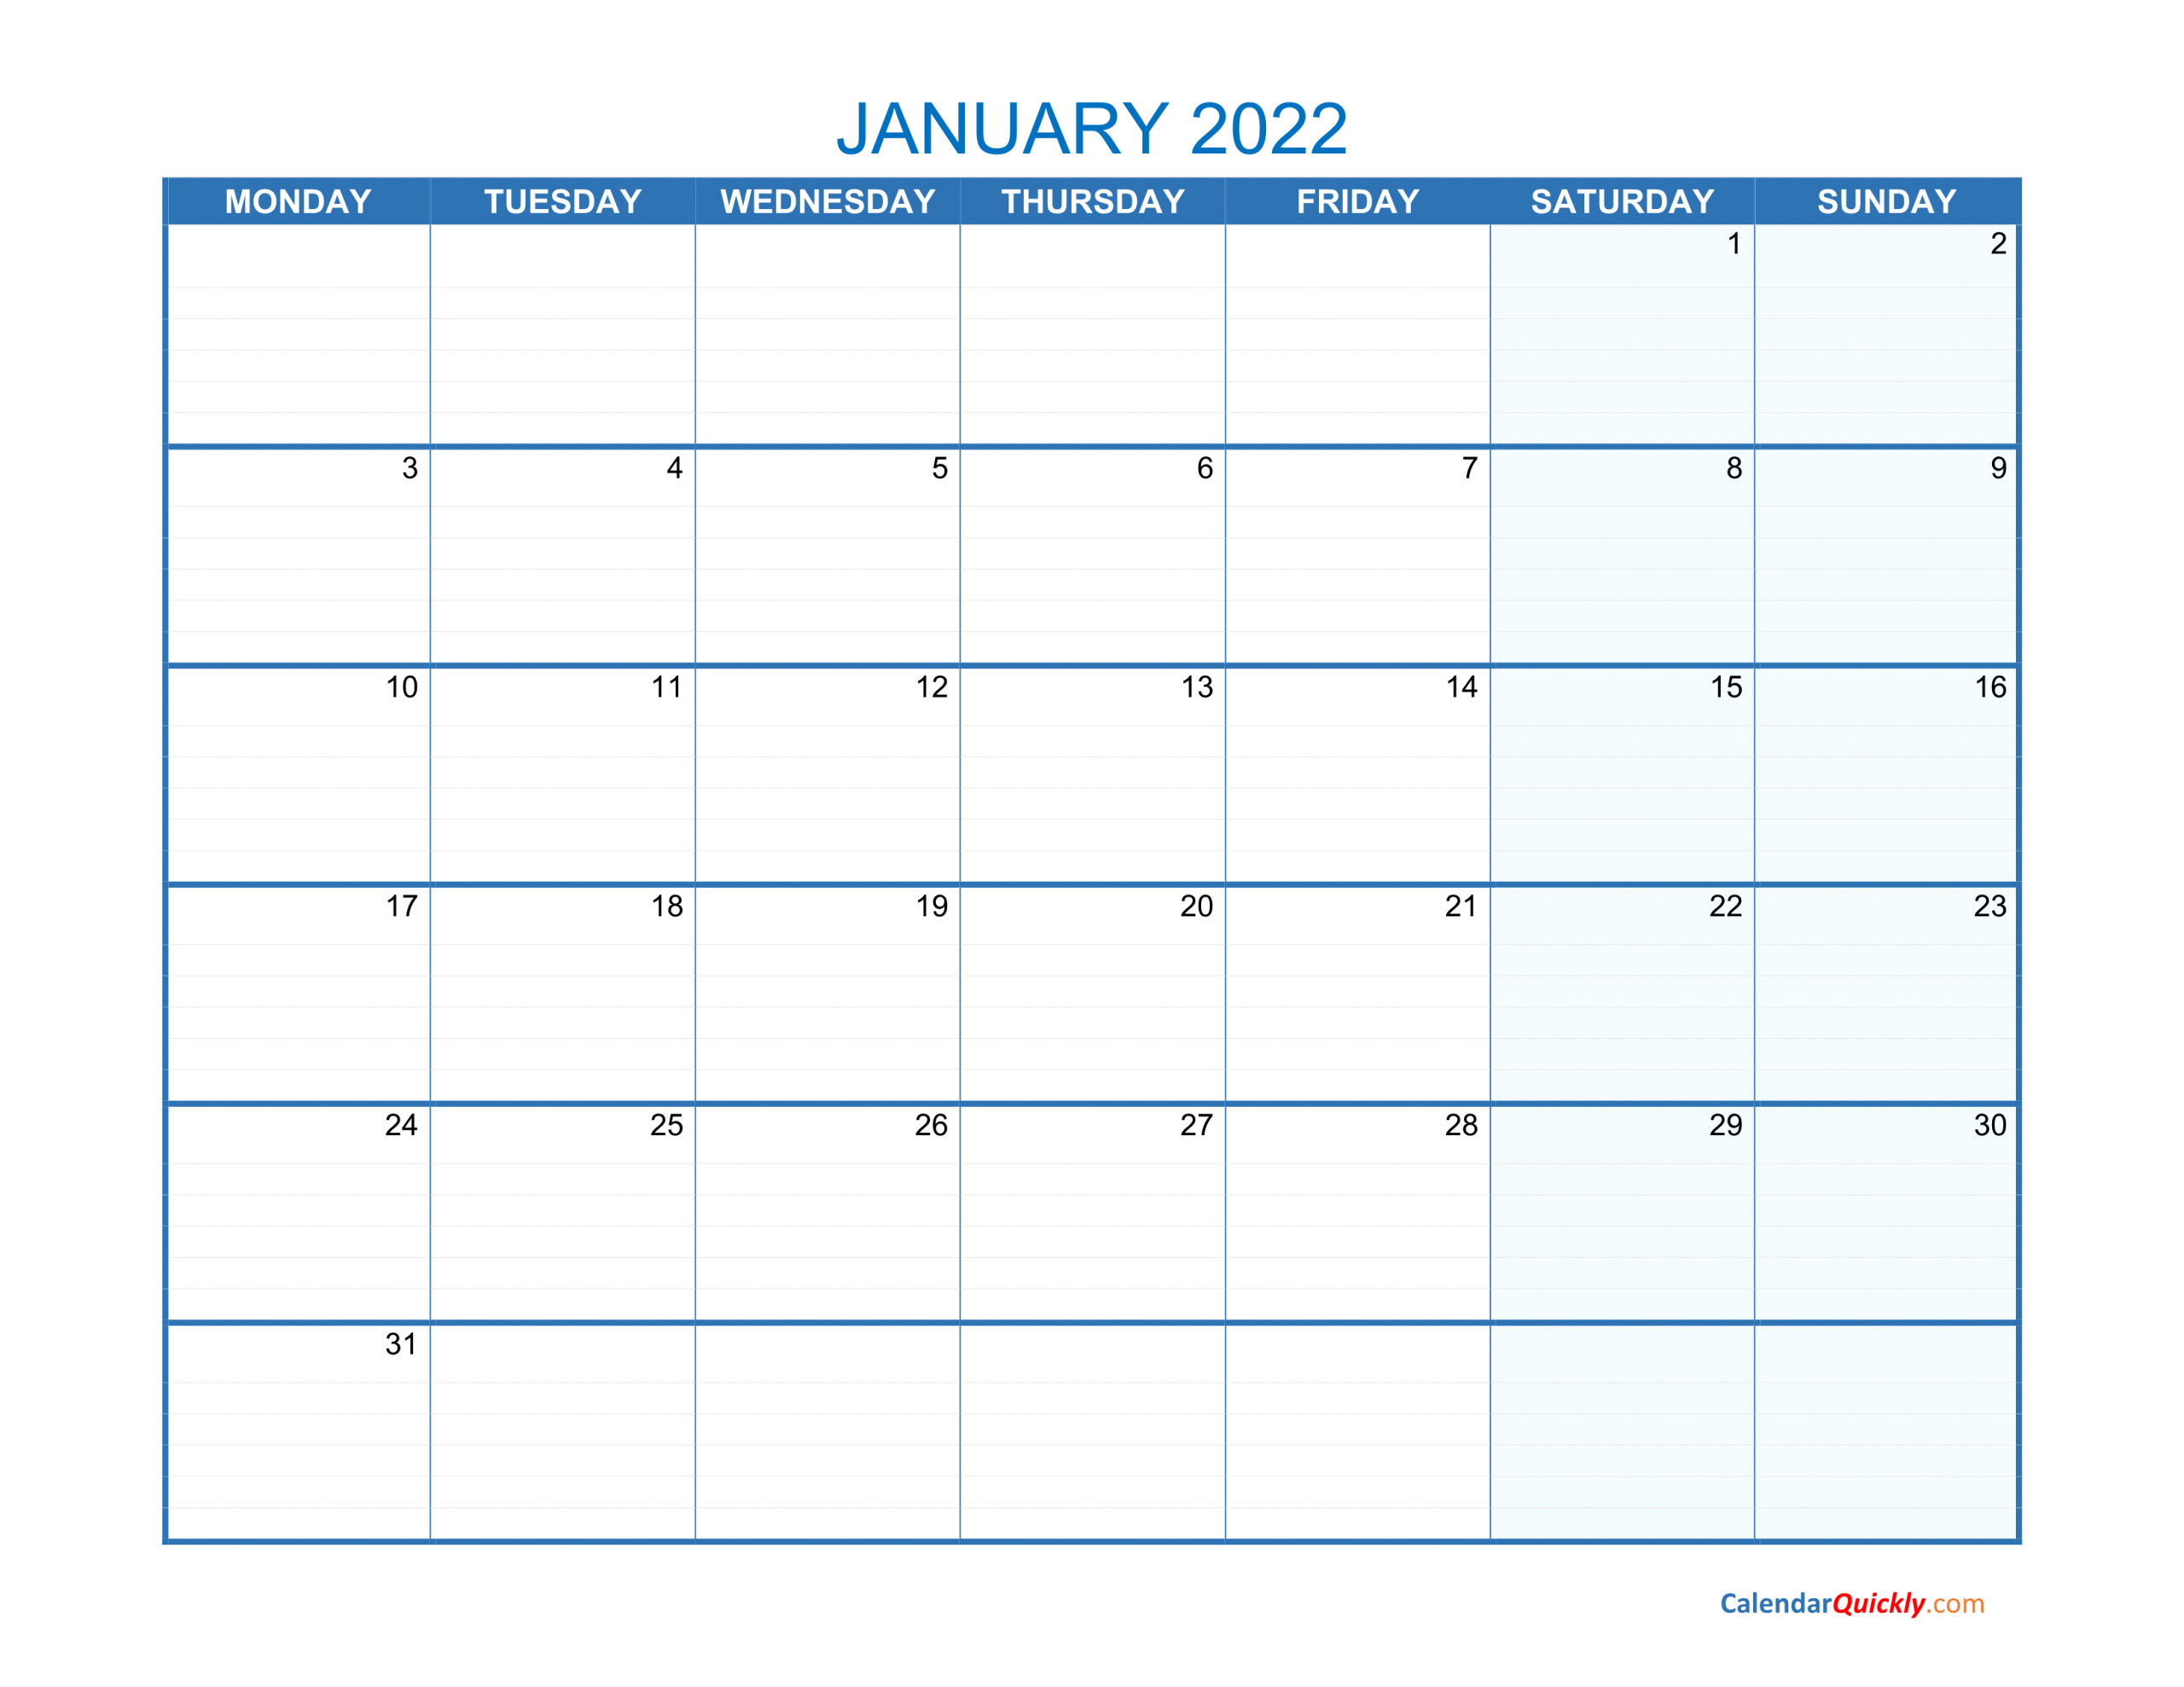 January Monday 2022 Blank Calendar | Calendar Quickly